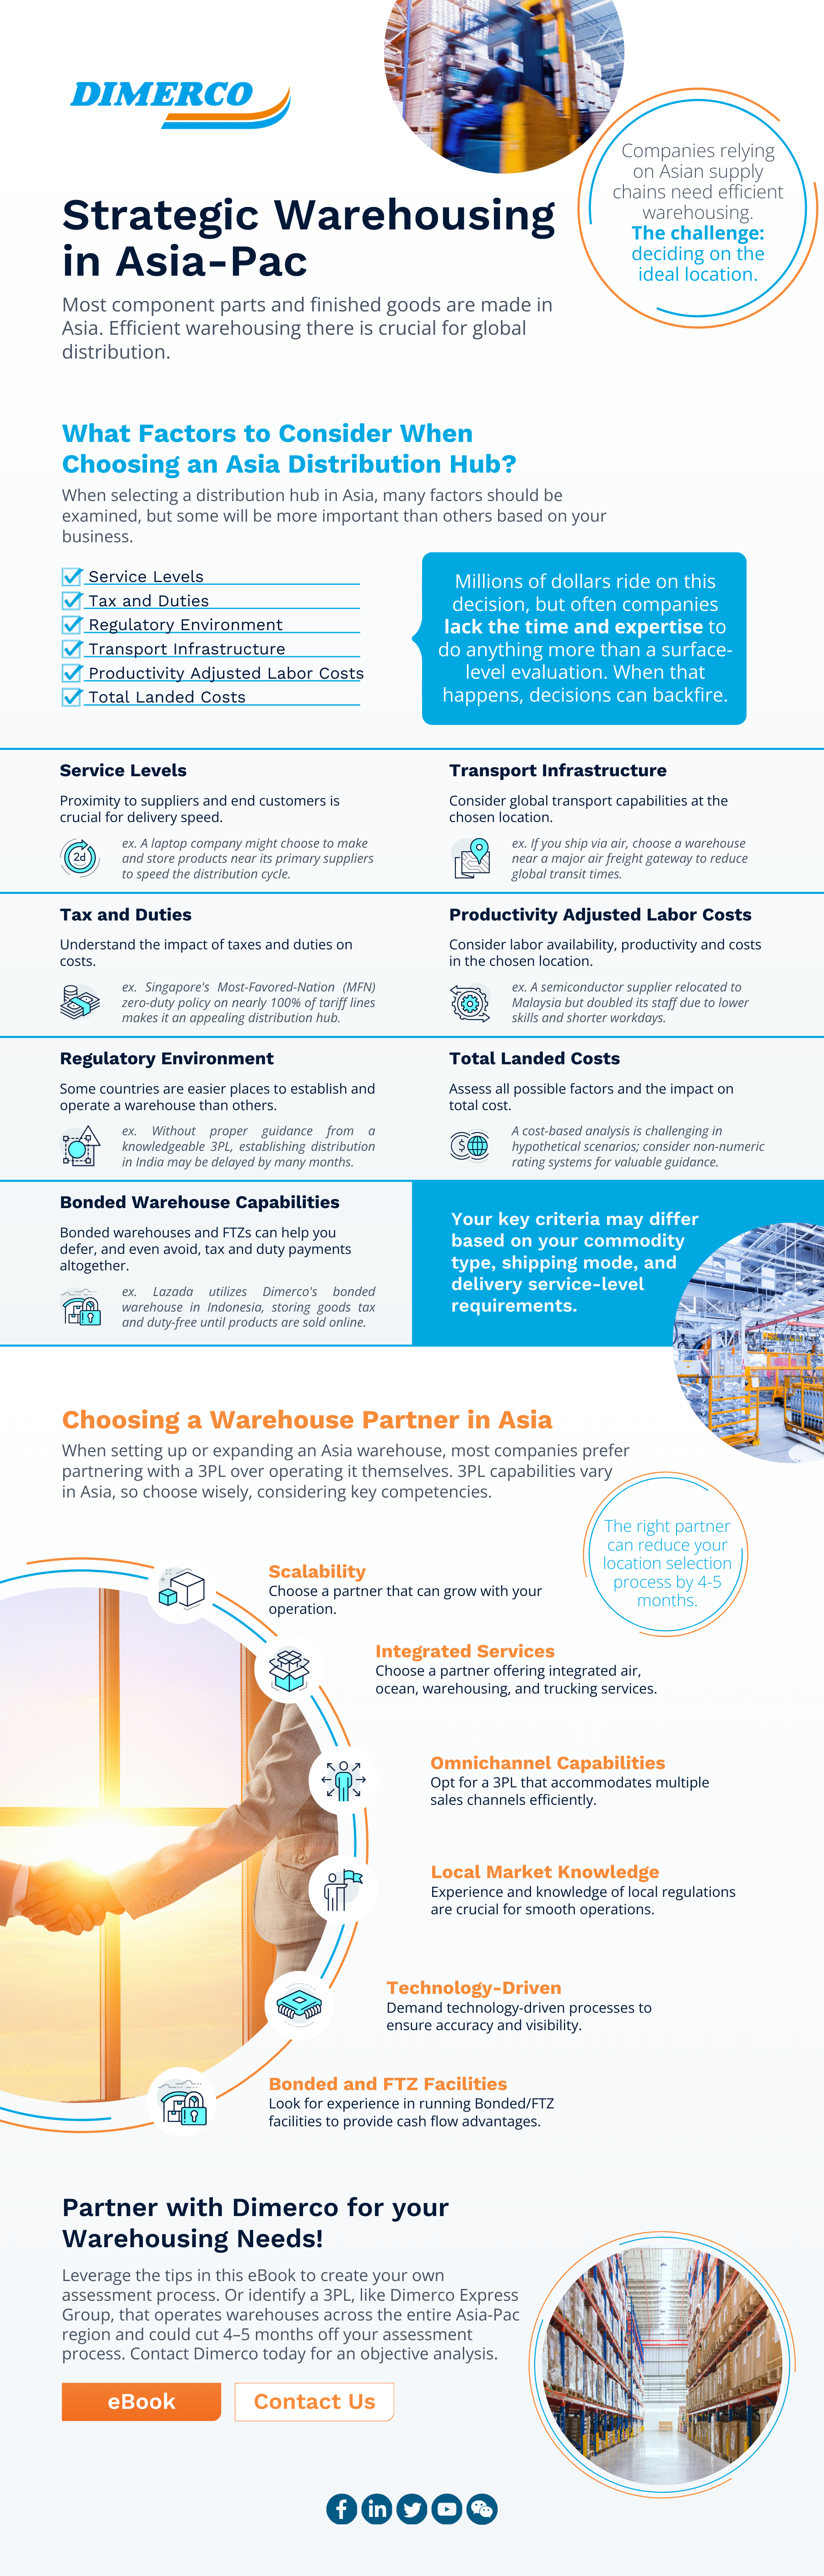 Strategic Warehousing in Asia-Pac Infographic.